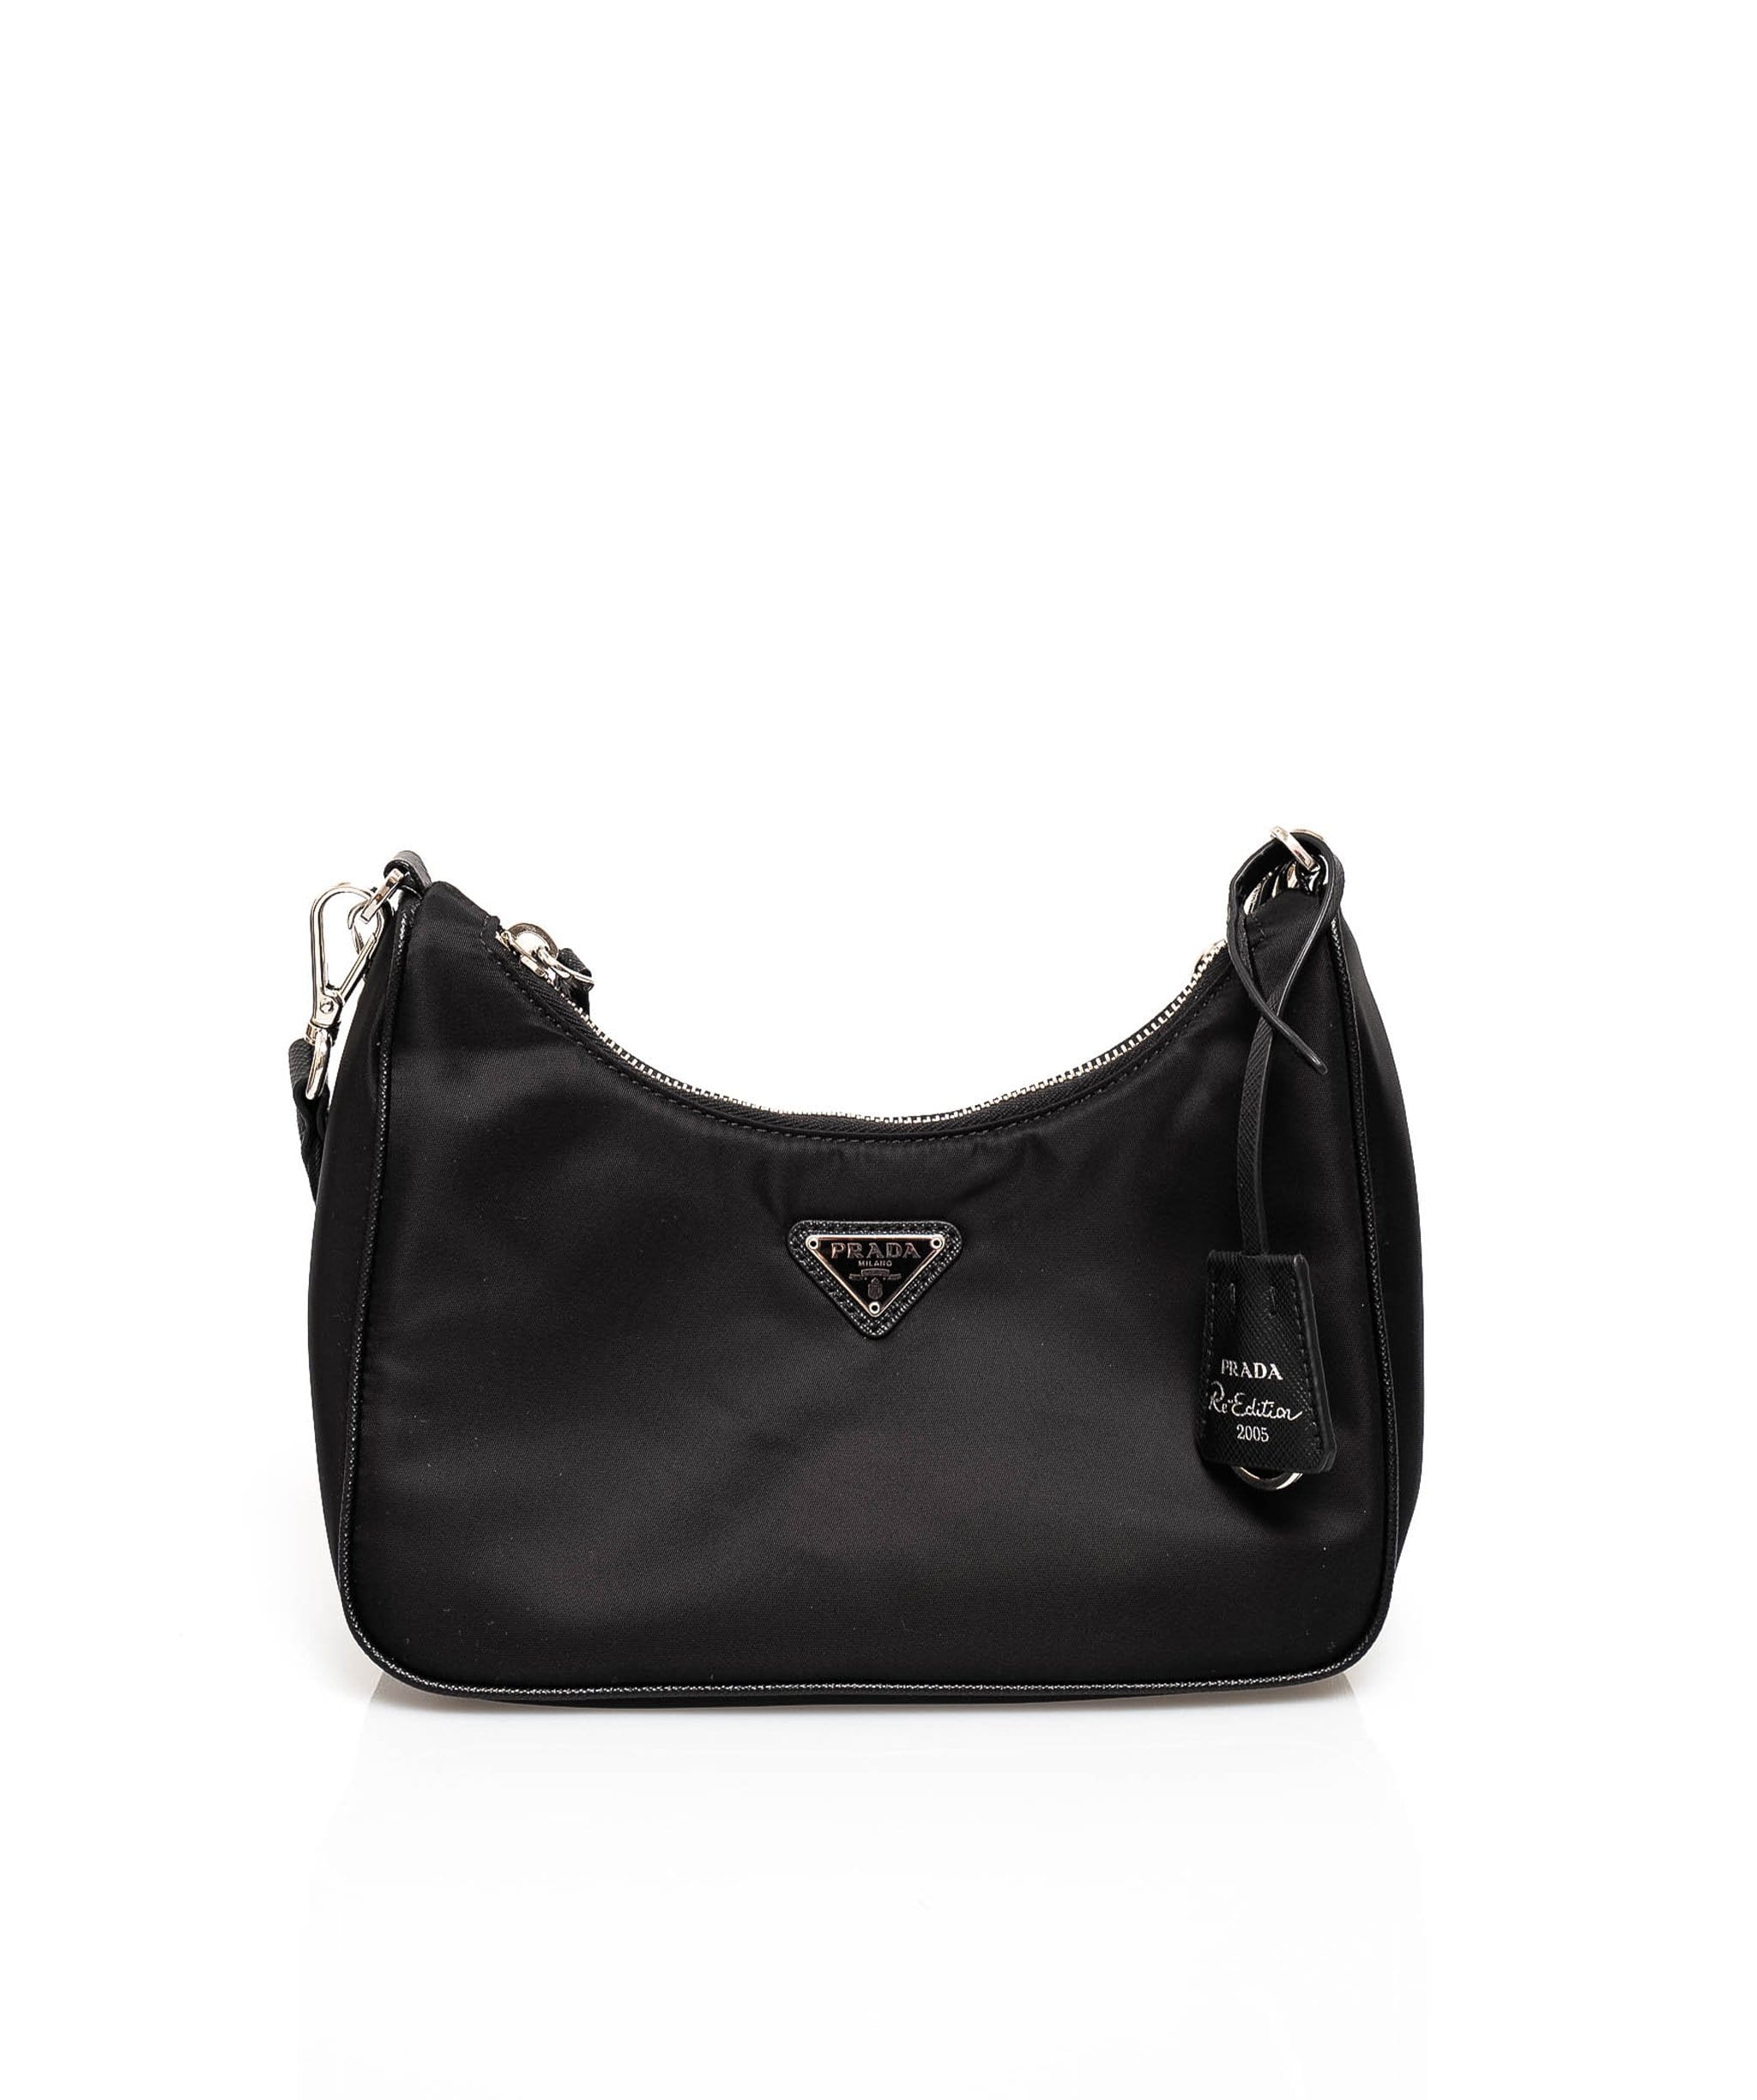 Prada Prada Re edition Black Nylon Bag - ADL1511